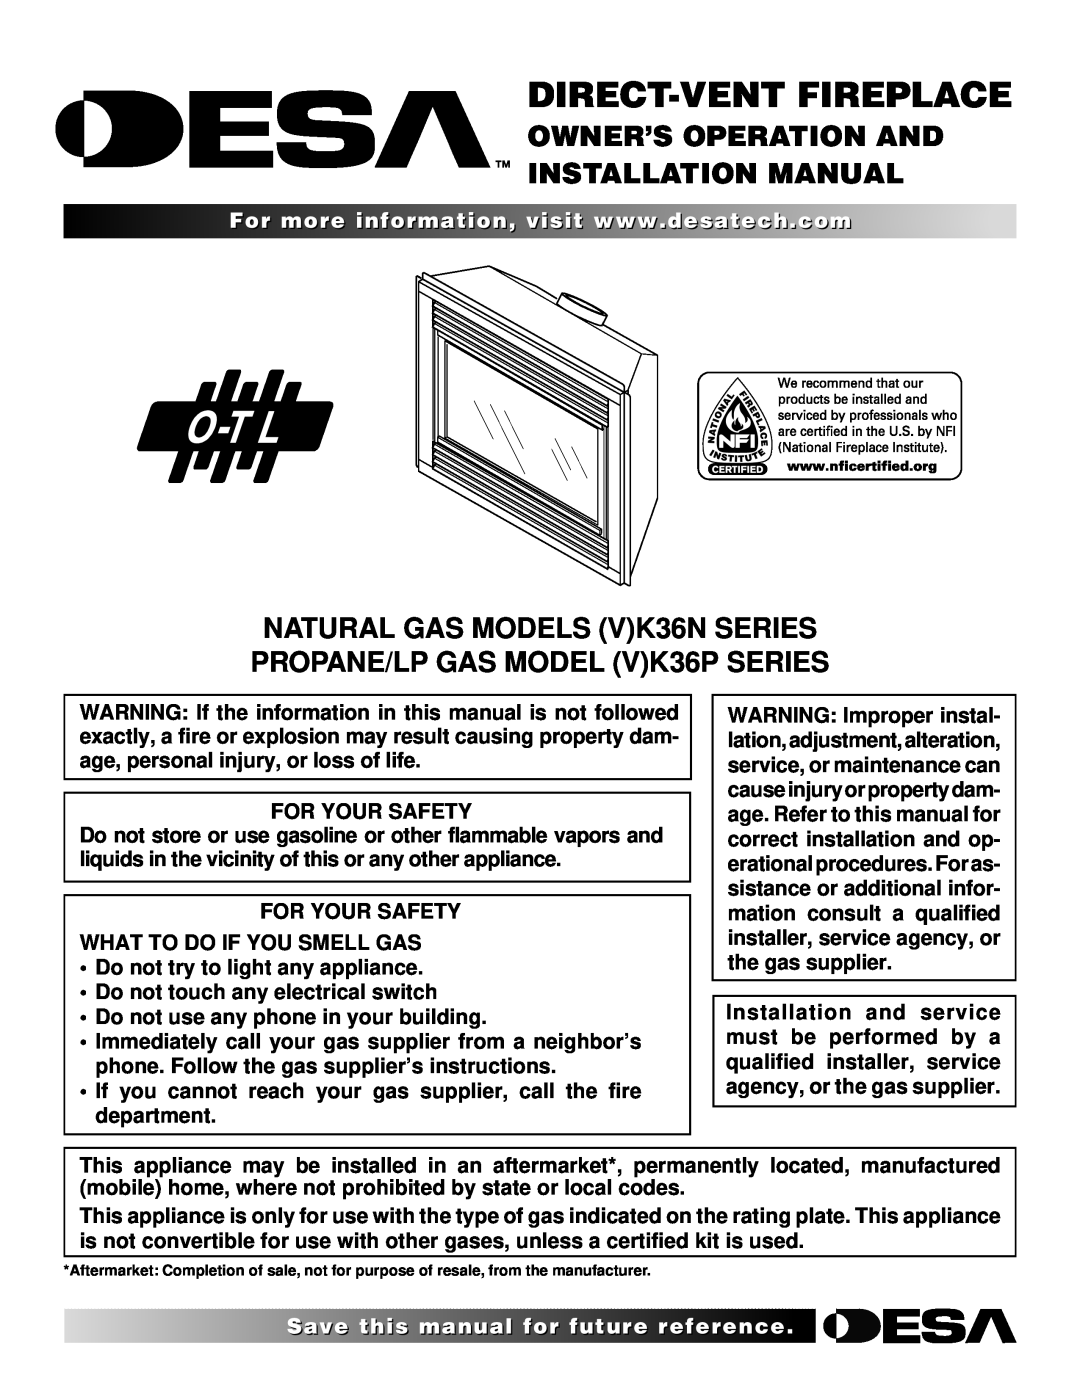 Desa (V)K36P SERIES installation manual Owner’S Operation And Installation Manual, NATURAL GAS MODELS VK36N SERIES 